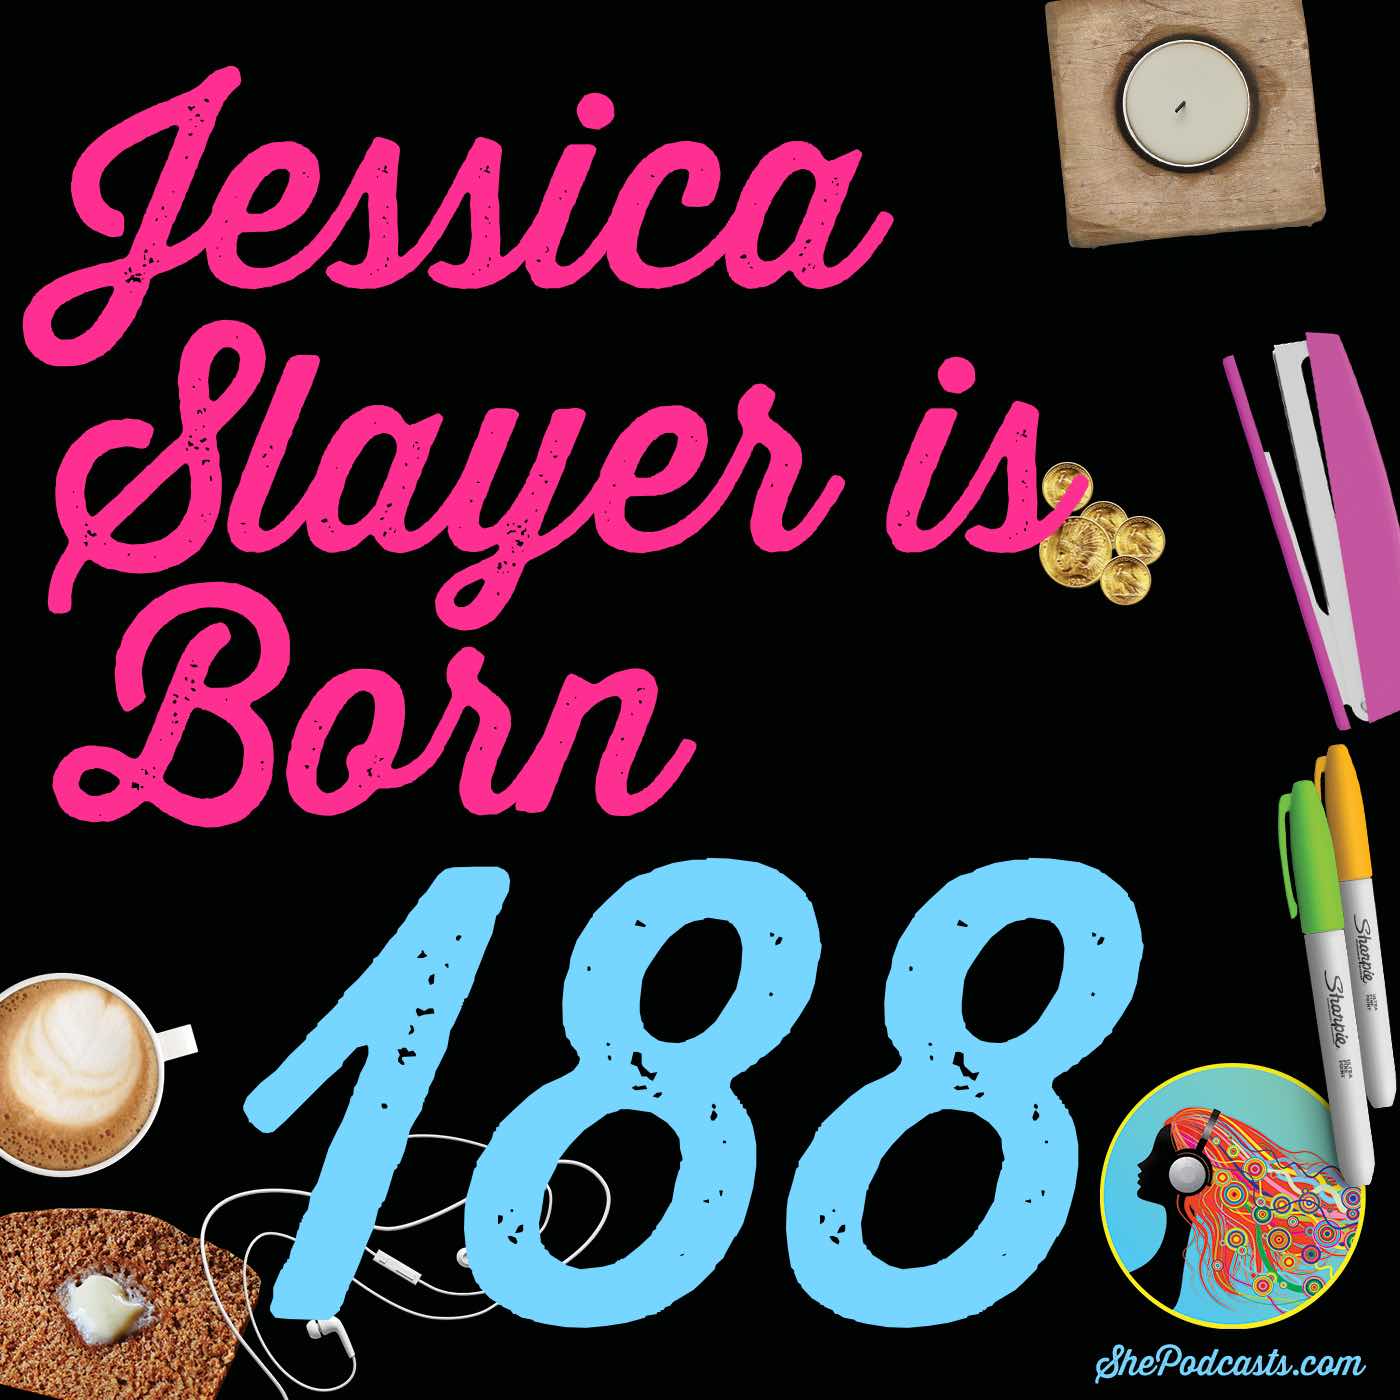 188 Jessica Slayer is Born